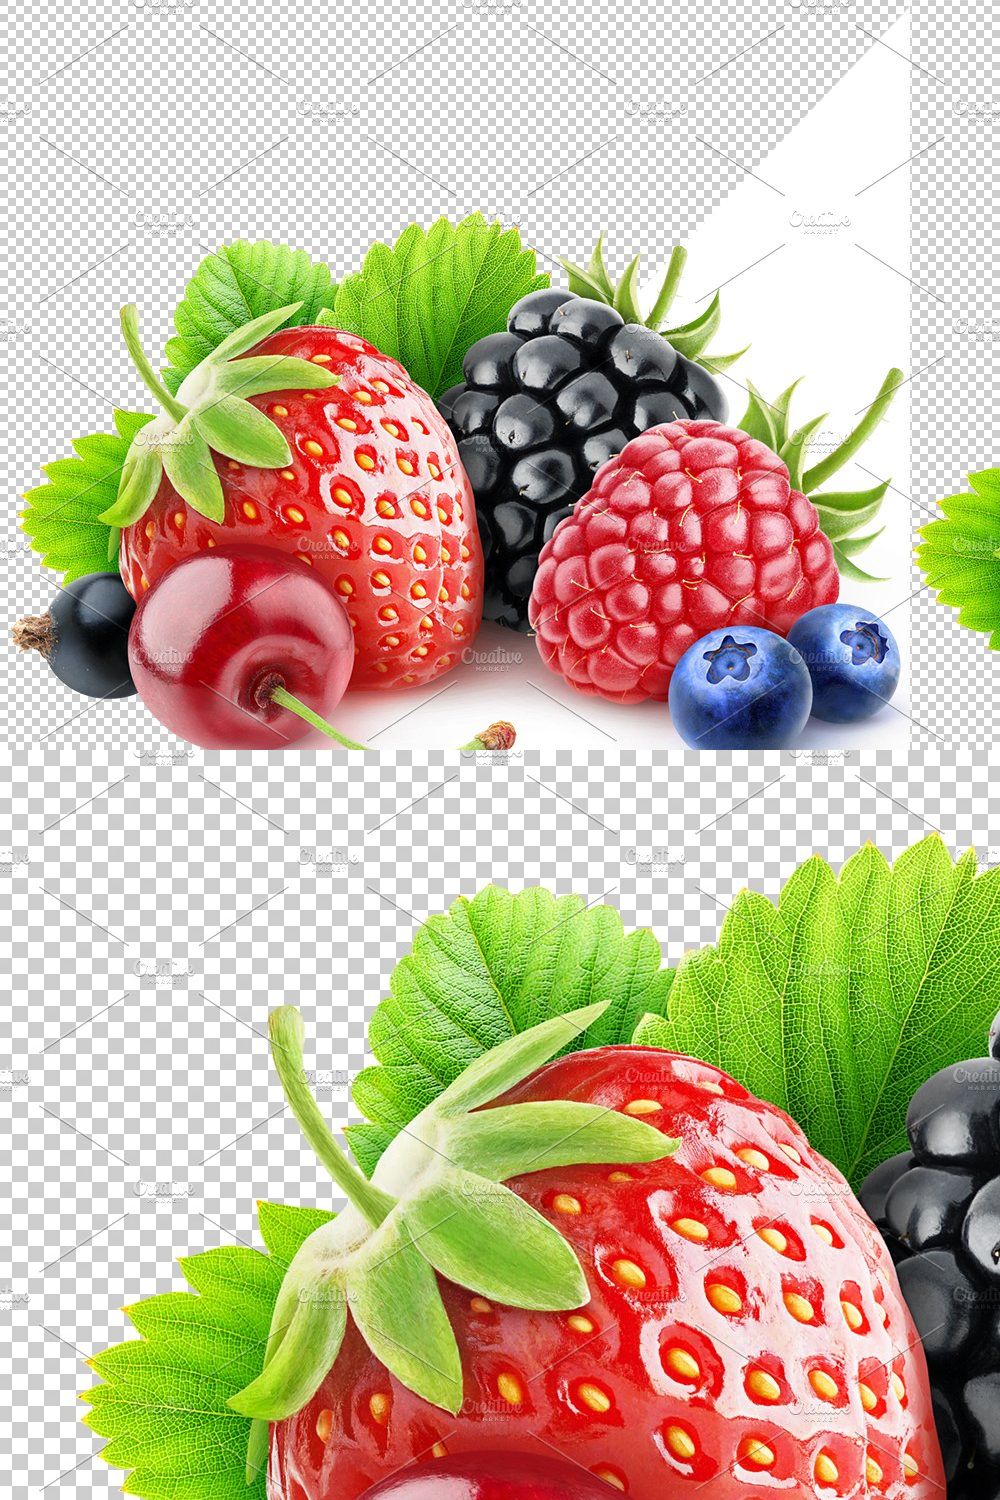 Fresh berries pinterest preview image.